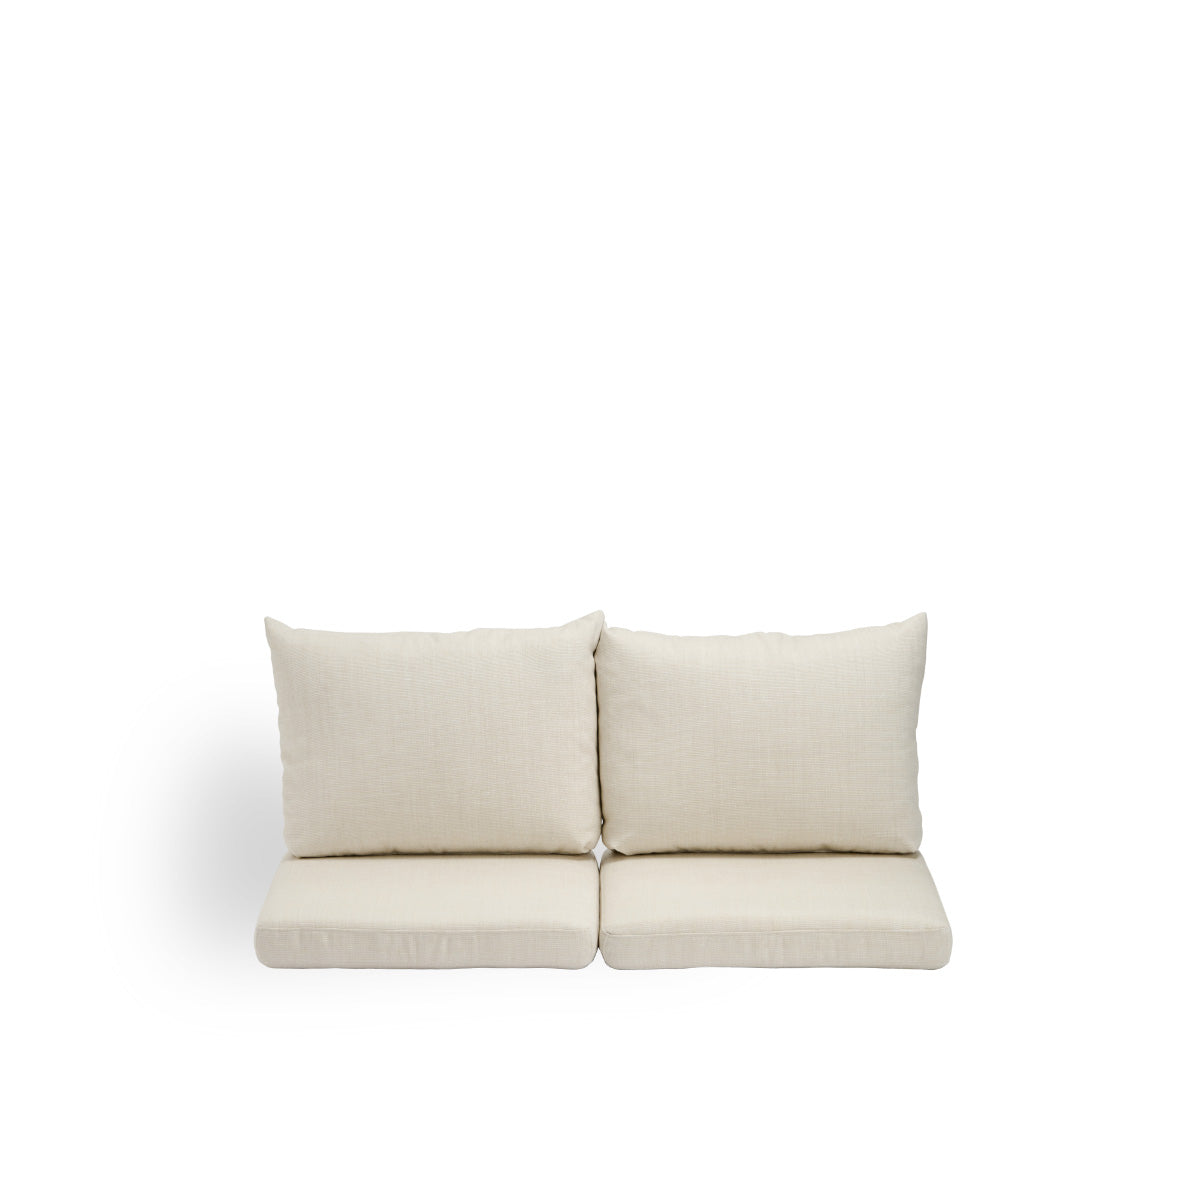 Donatello 2-seater | Seat & back cushion by Sika